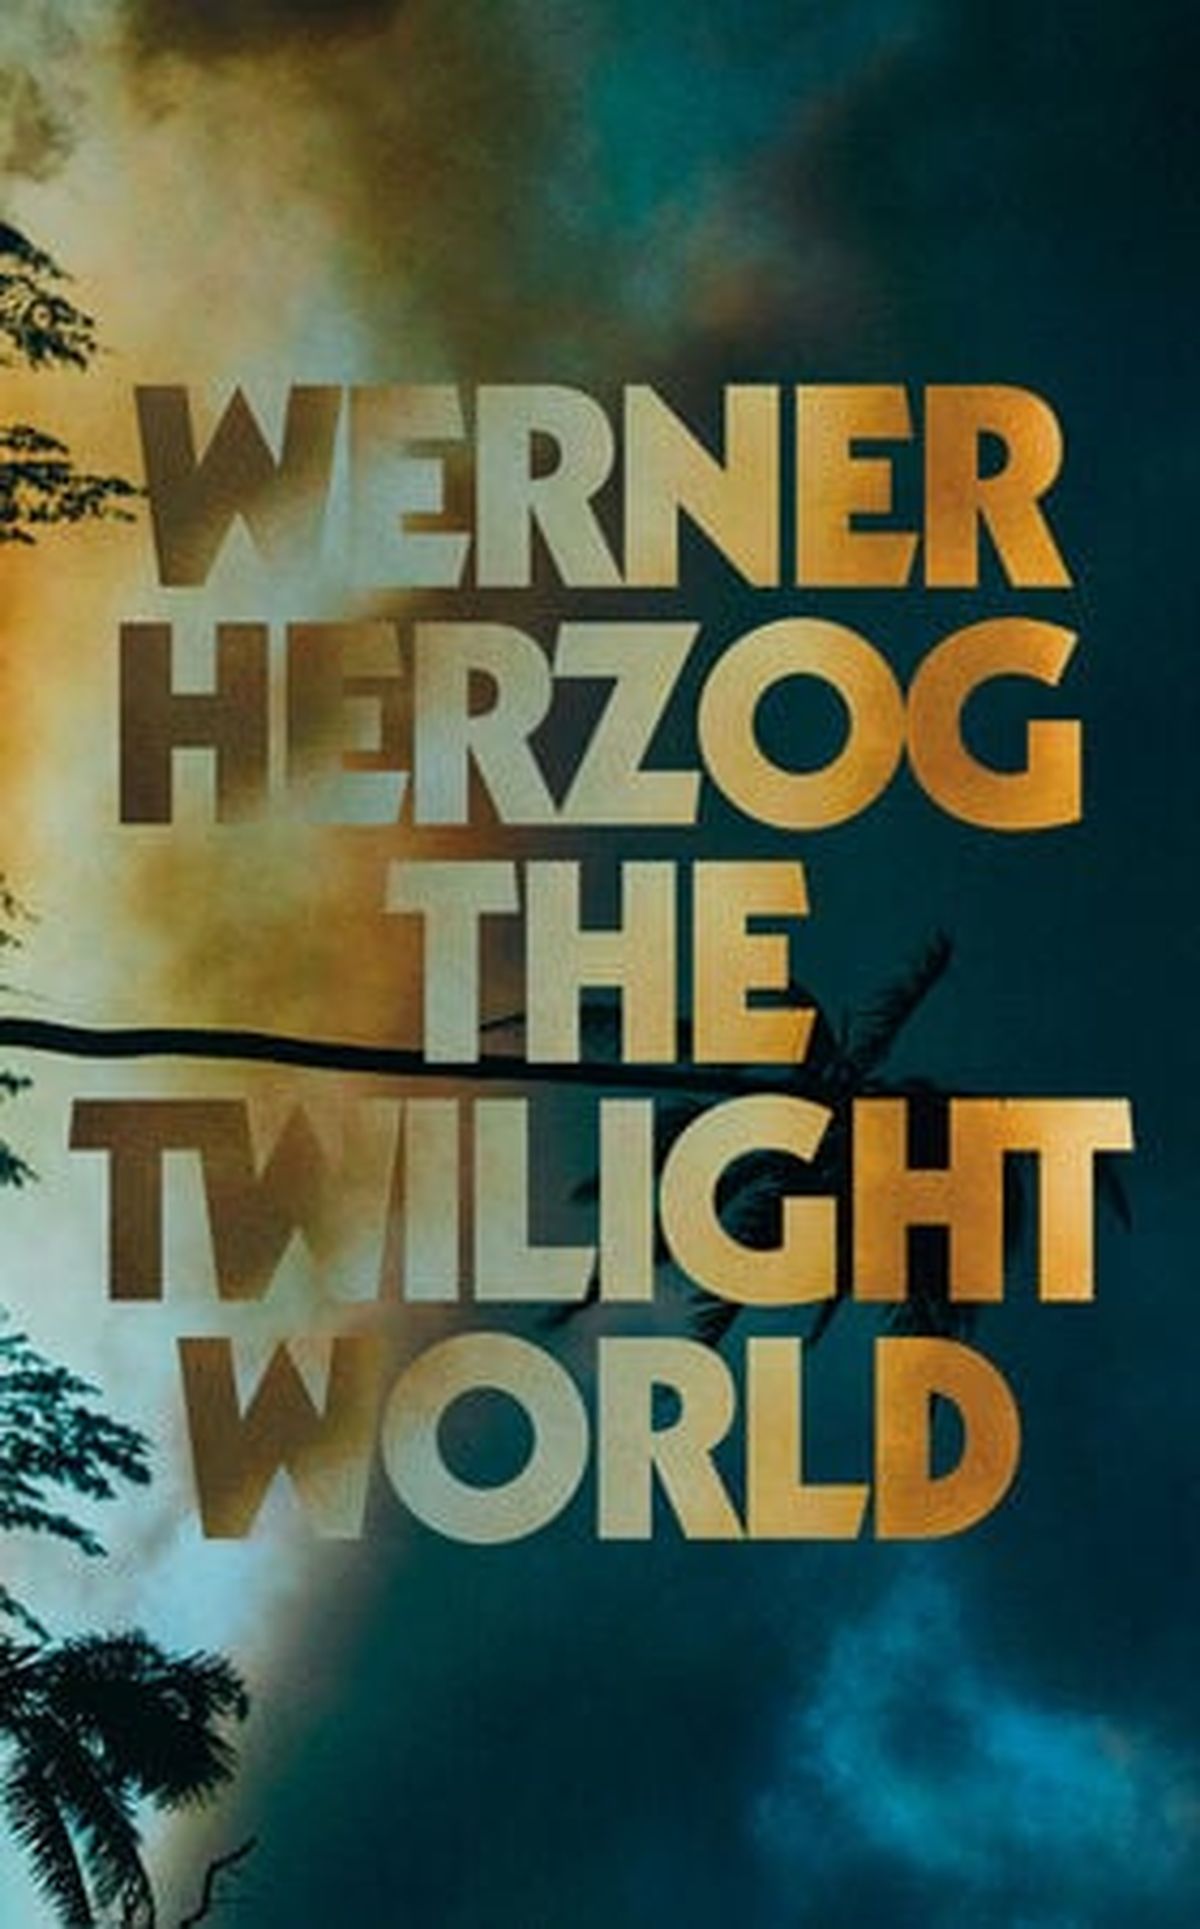 The Twilight World  (Penguin Press/Handout)